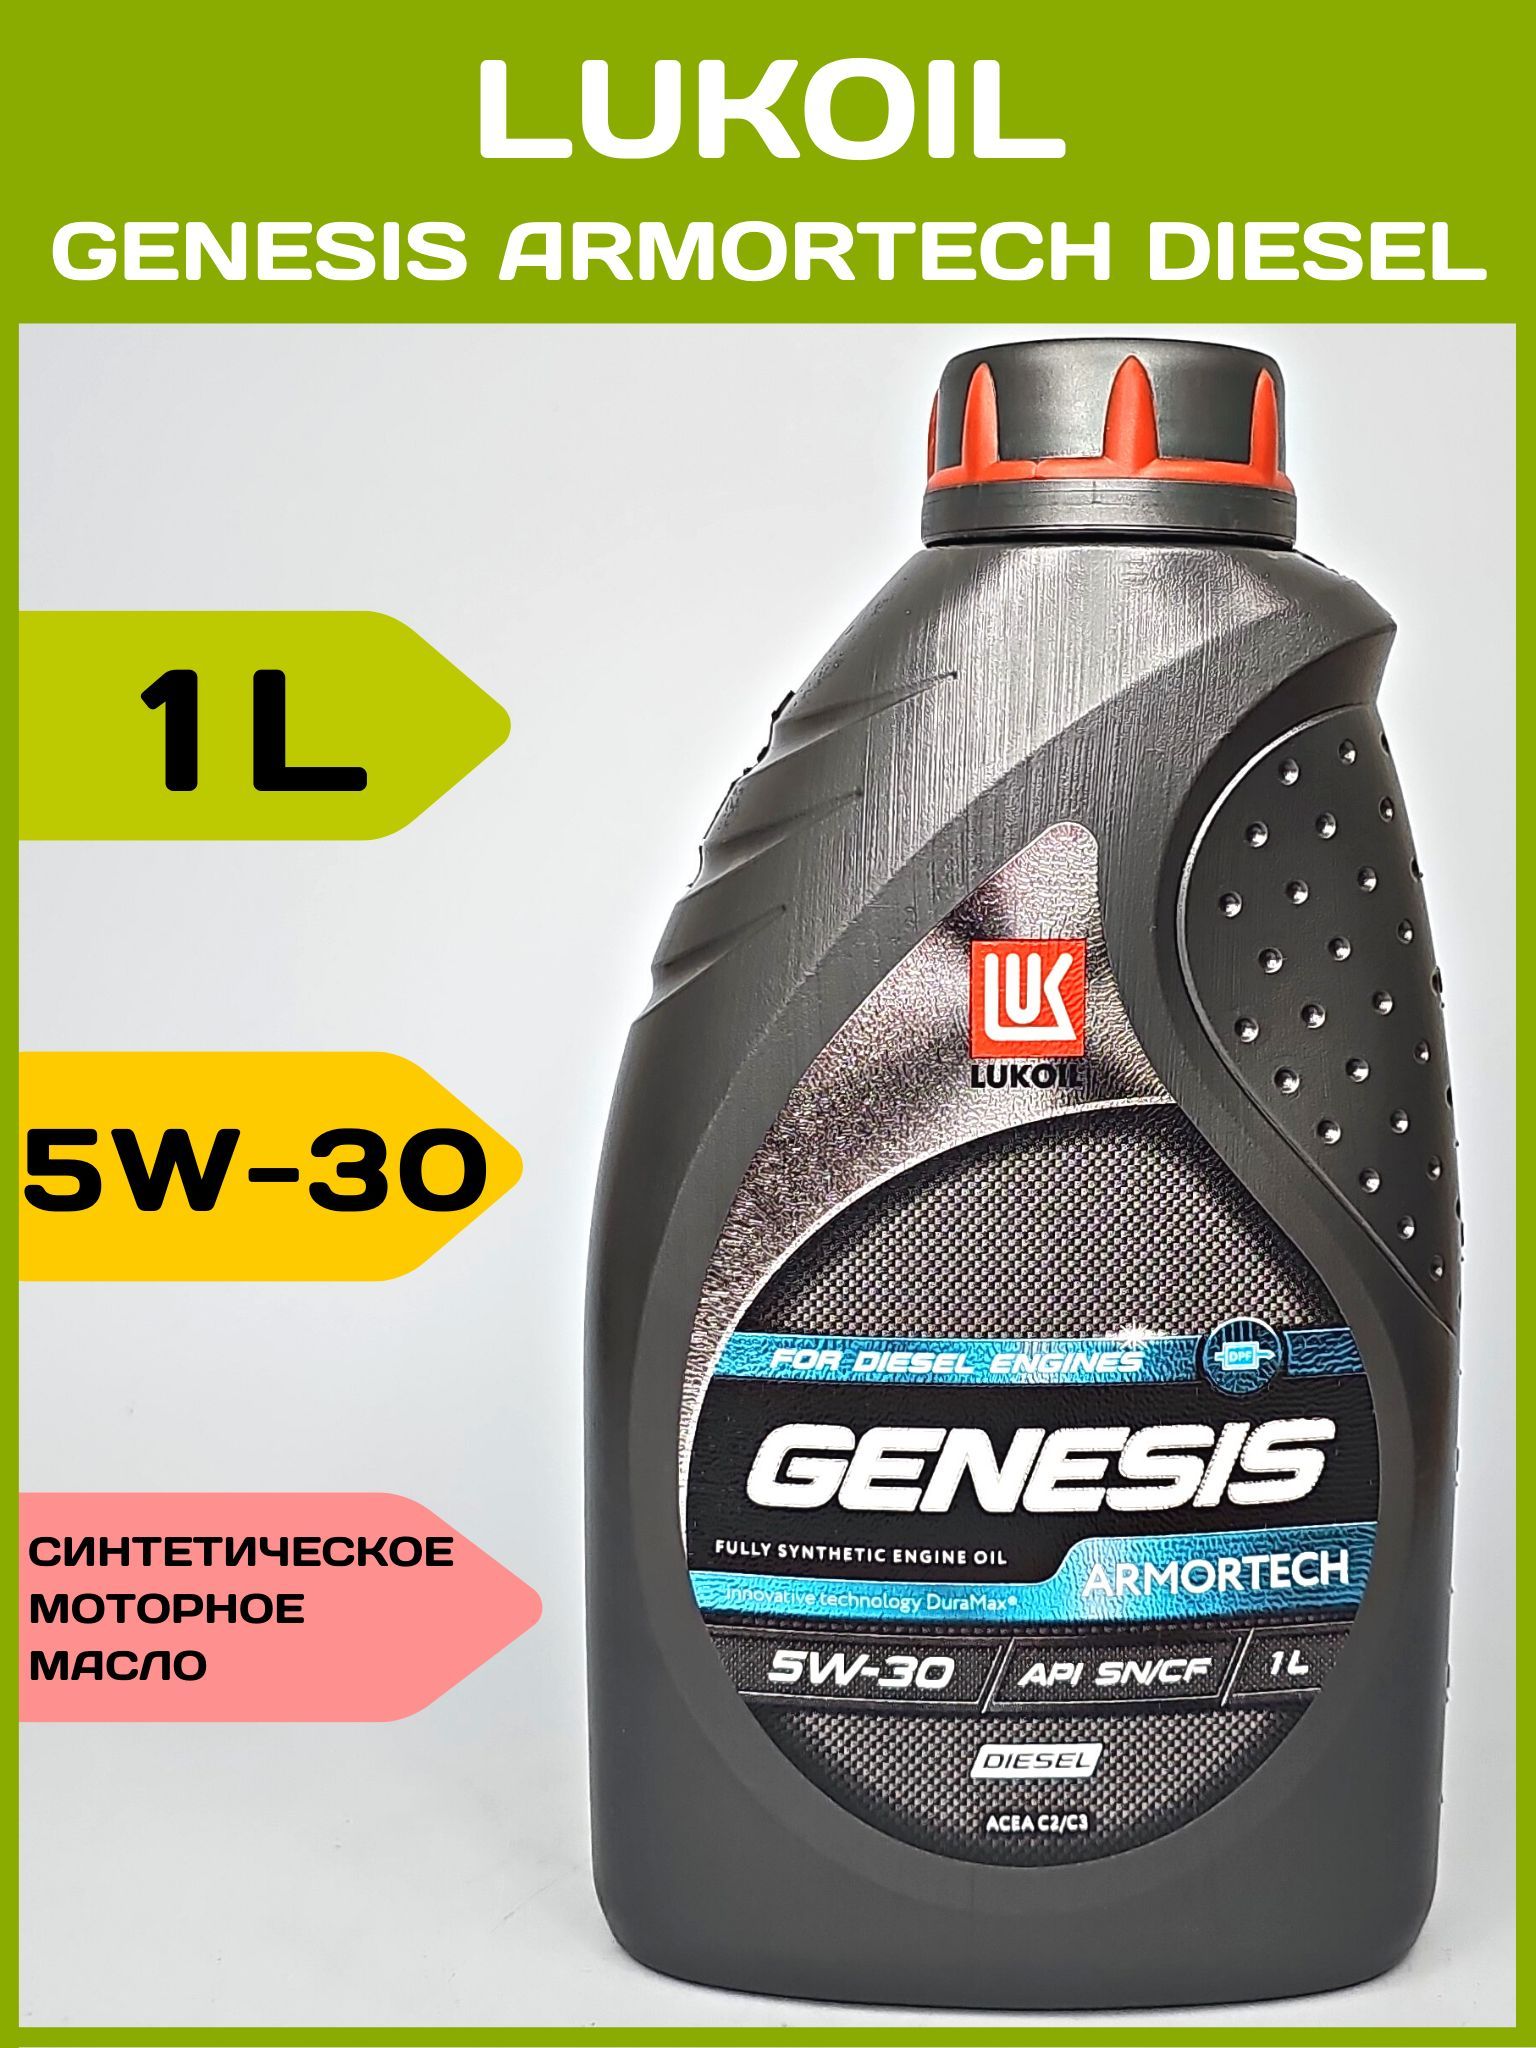 Оригинал лукойл генезис. Lukoil Genesis Armortech dexos2. Lukoil Genesis 5w30. Лукойл Генезис 5в30 дизель. Армотек масло Генезис 5w-30.